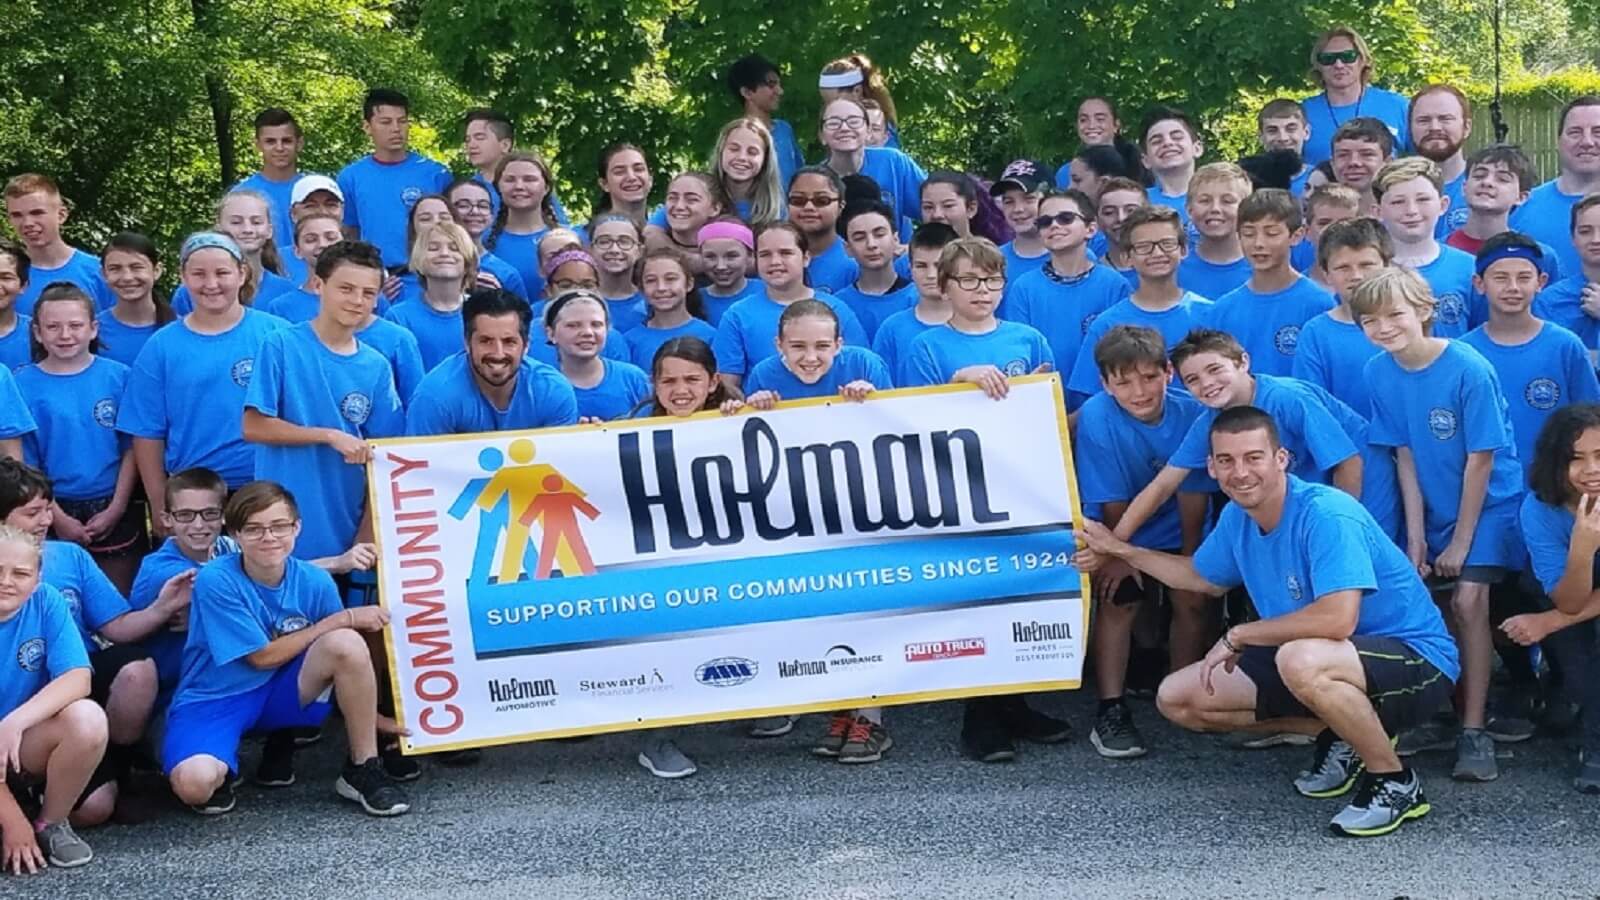 Holman team holding a Holman community banner